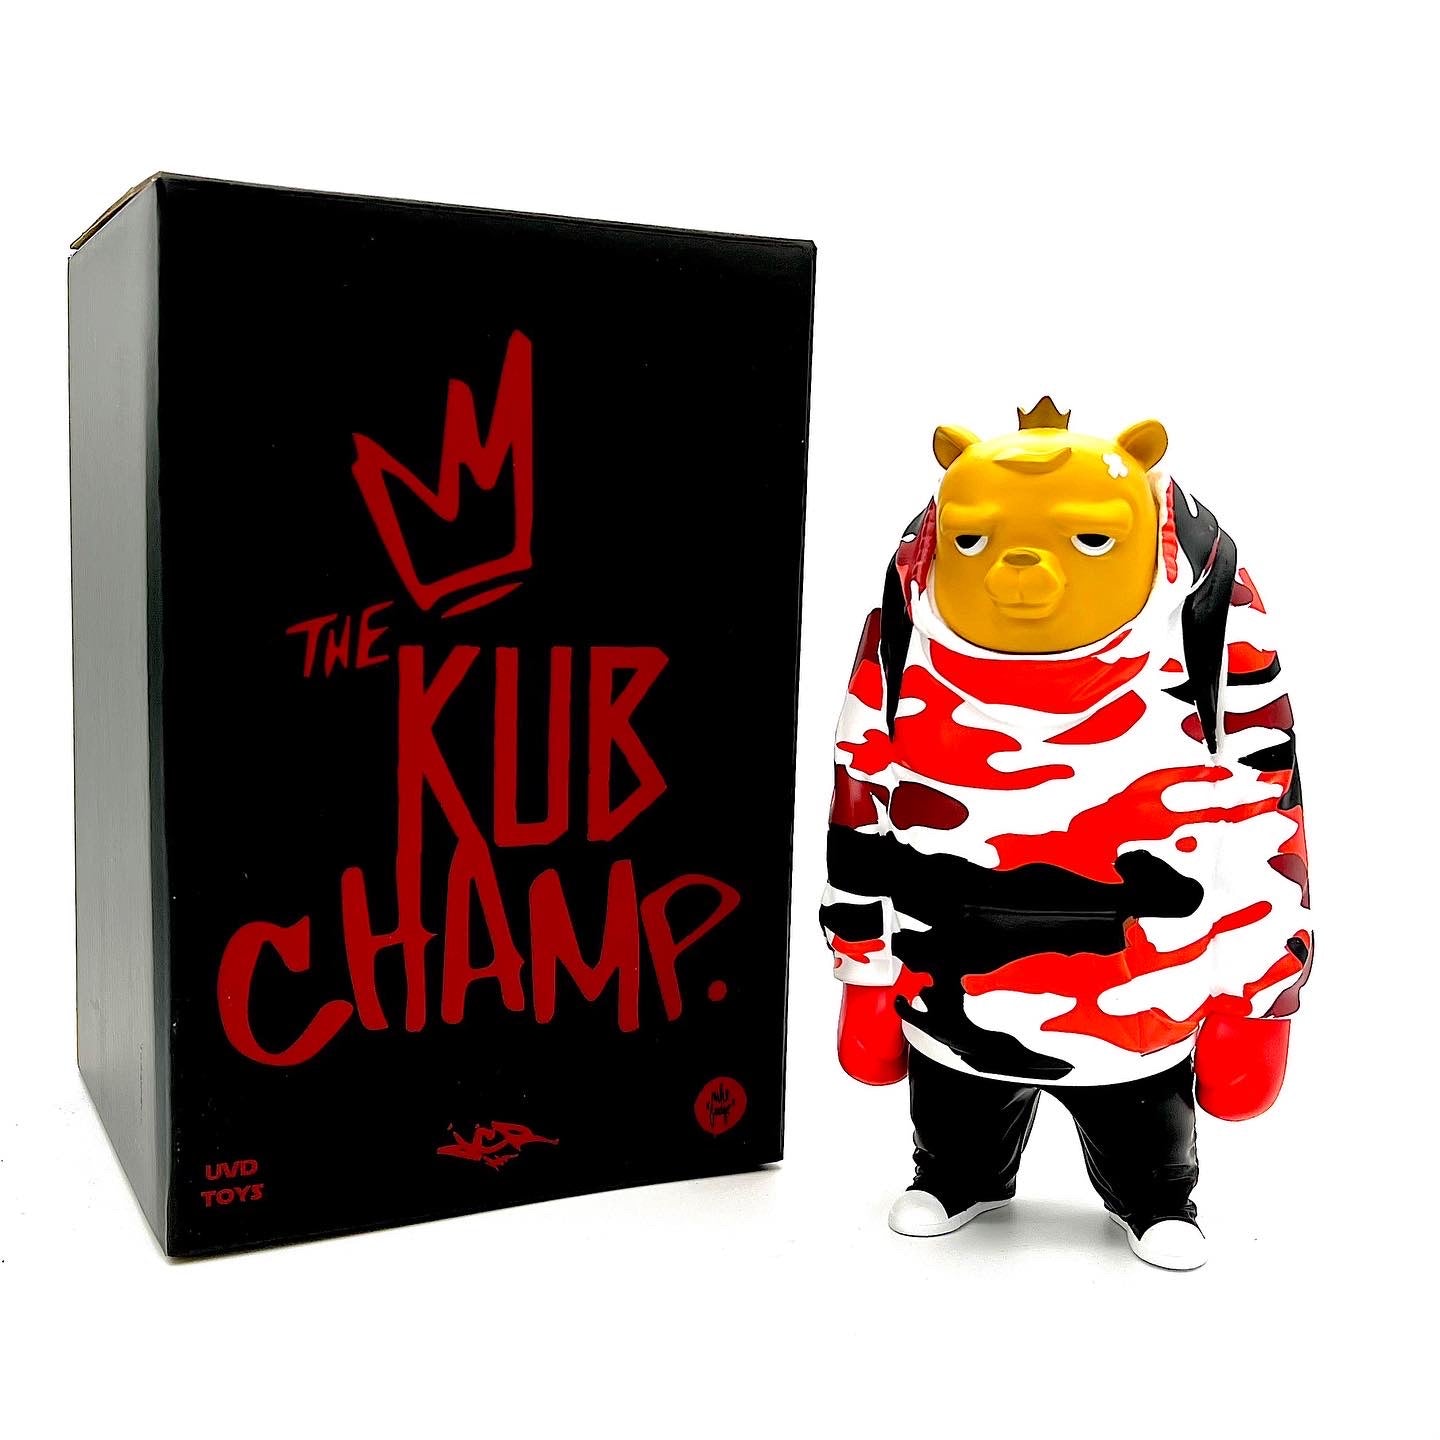 The Kub Champ"Red Camo" edition